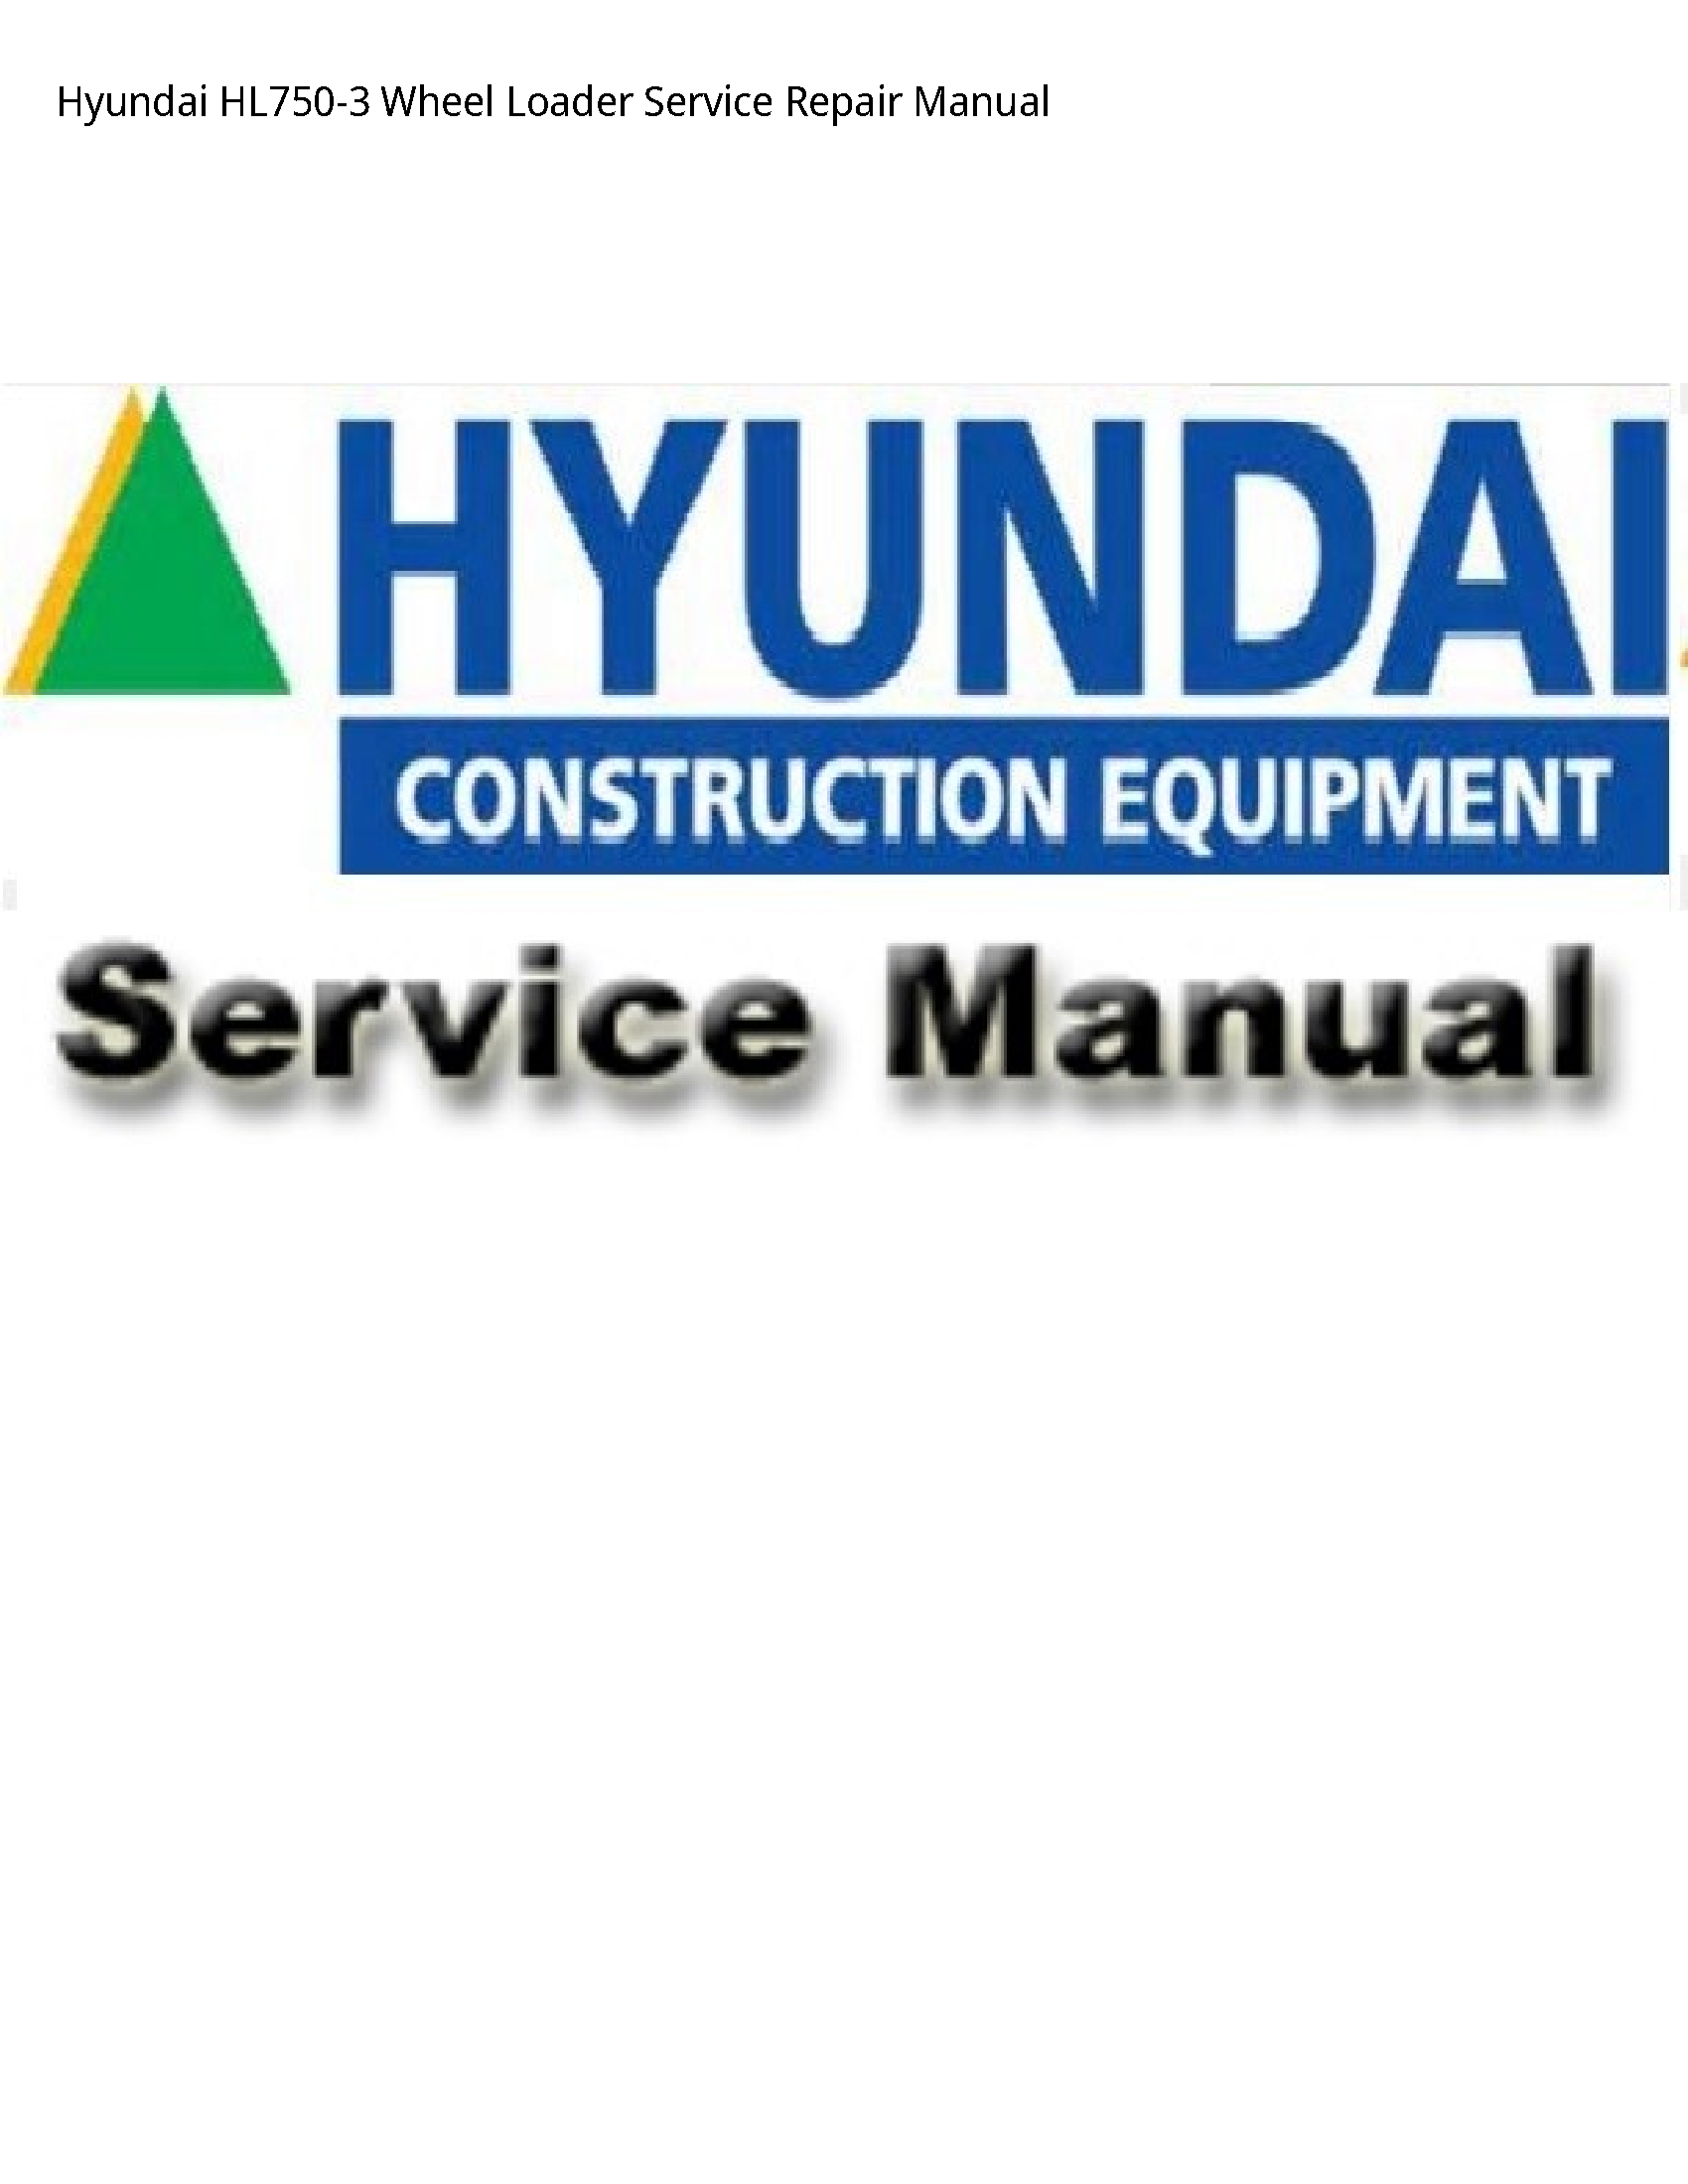 Hyundai HL750-3 Wheel Loader manual